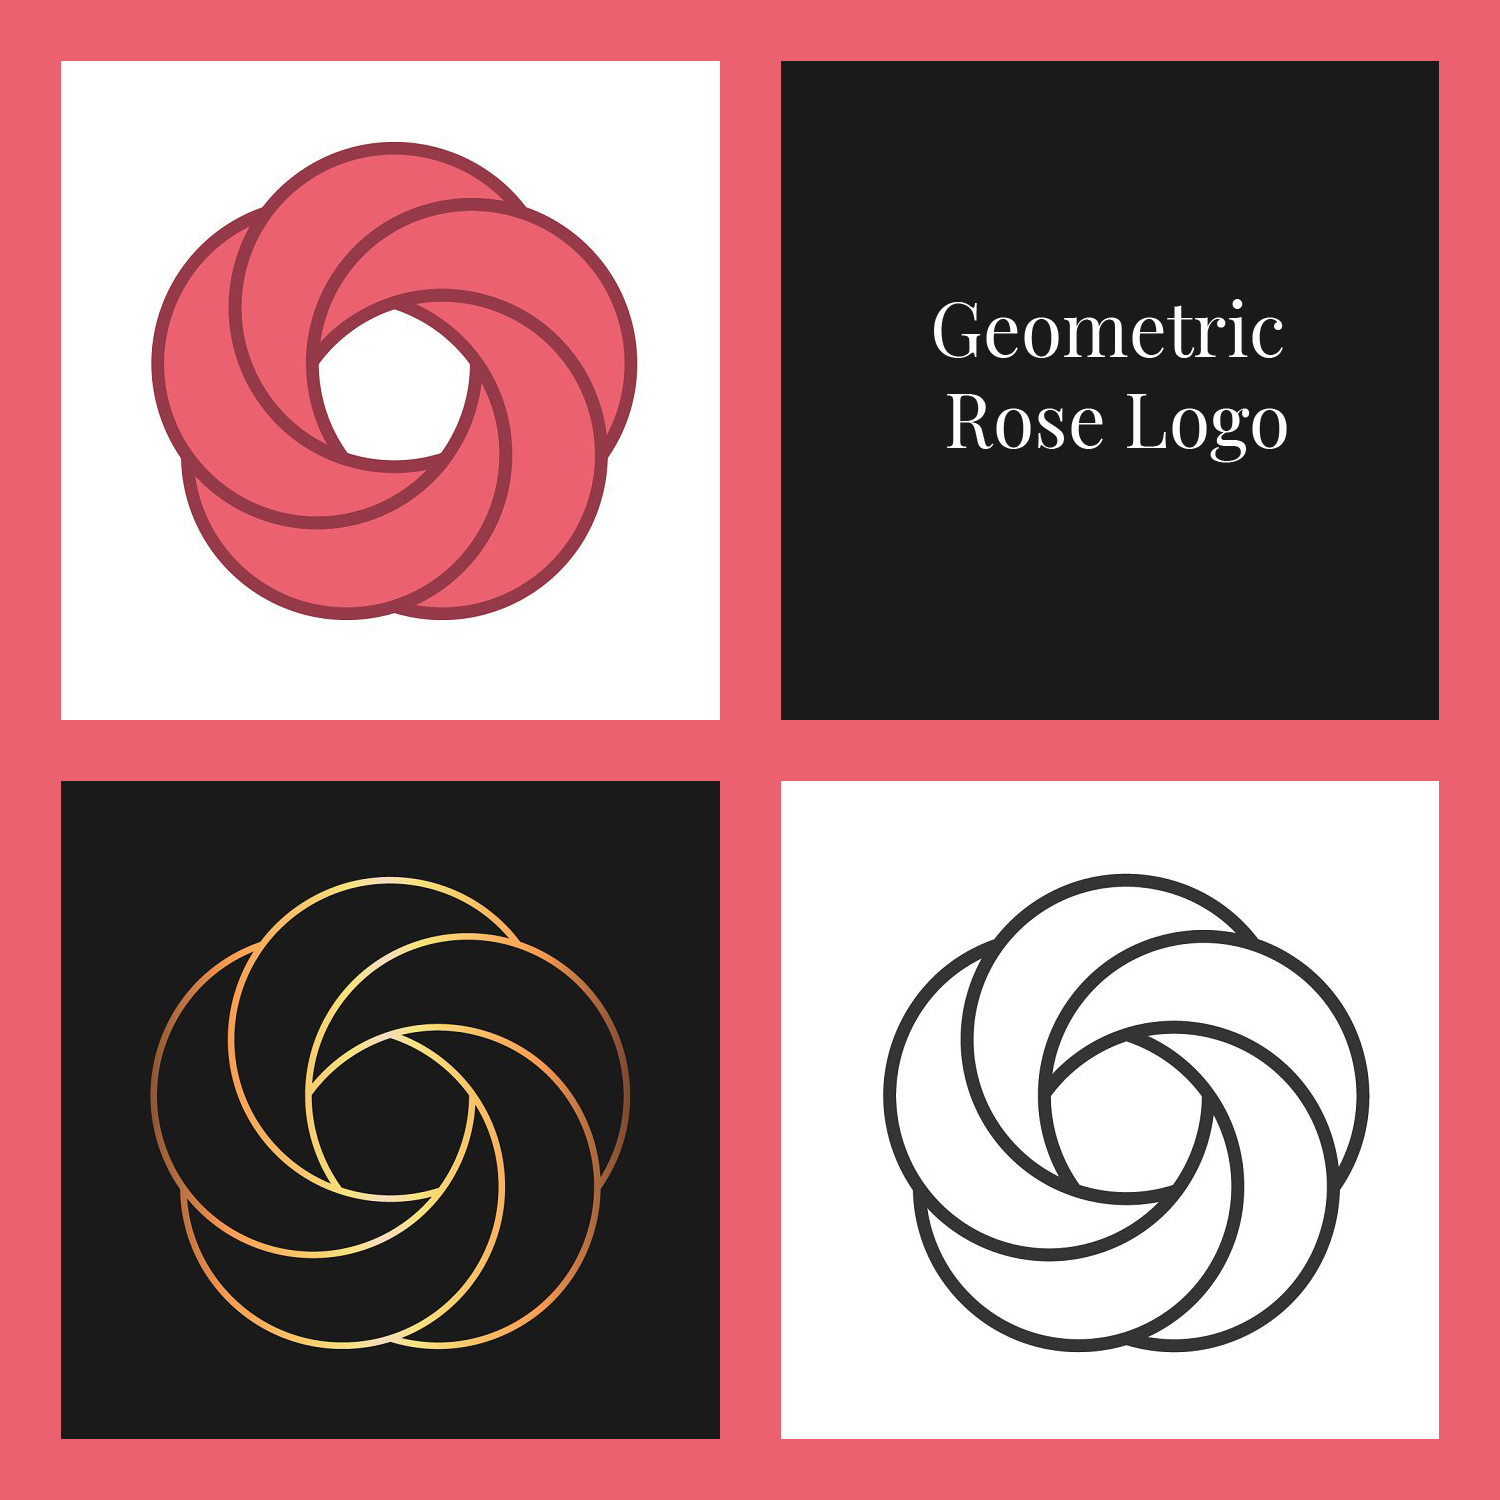 Prints of geometric rose logo.